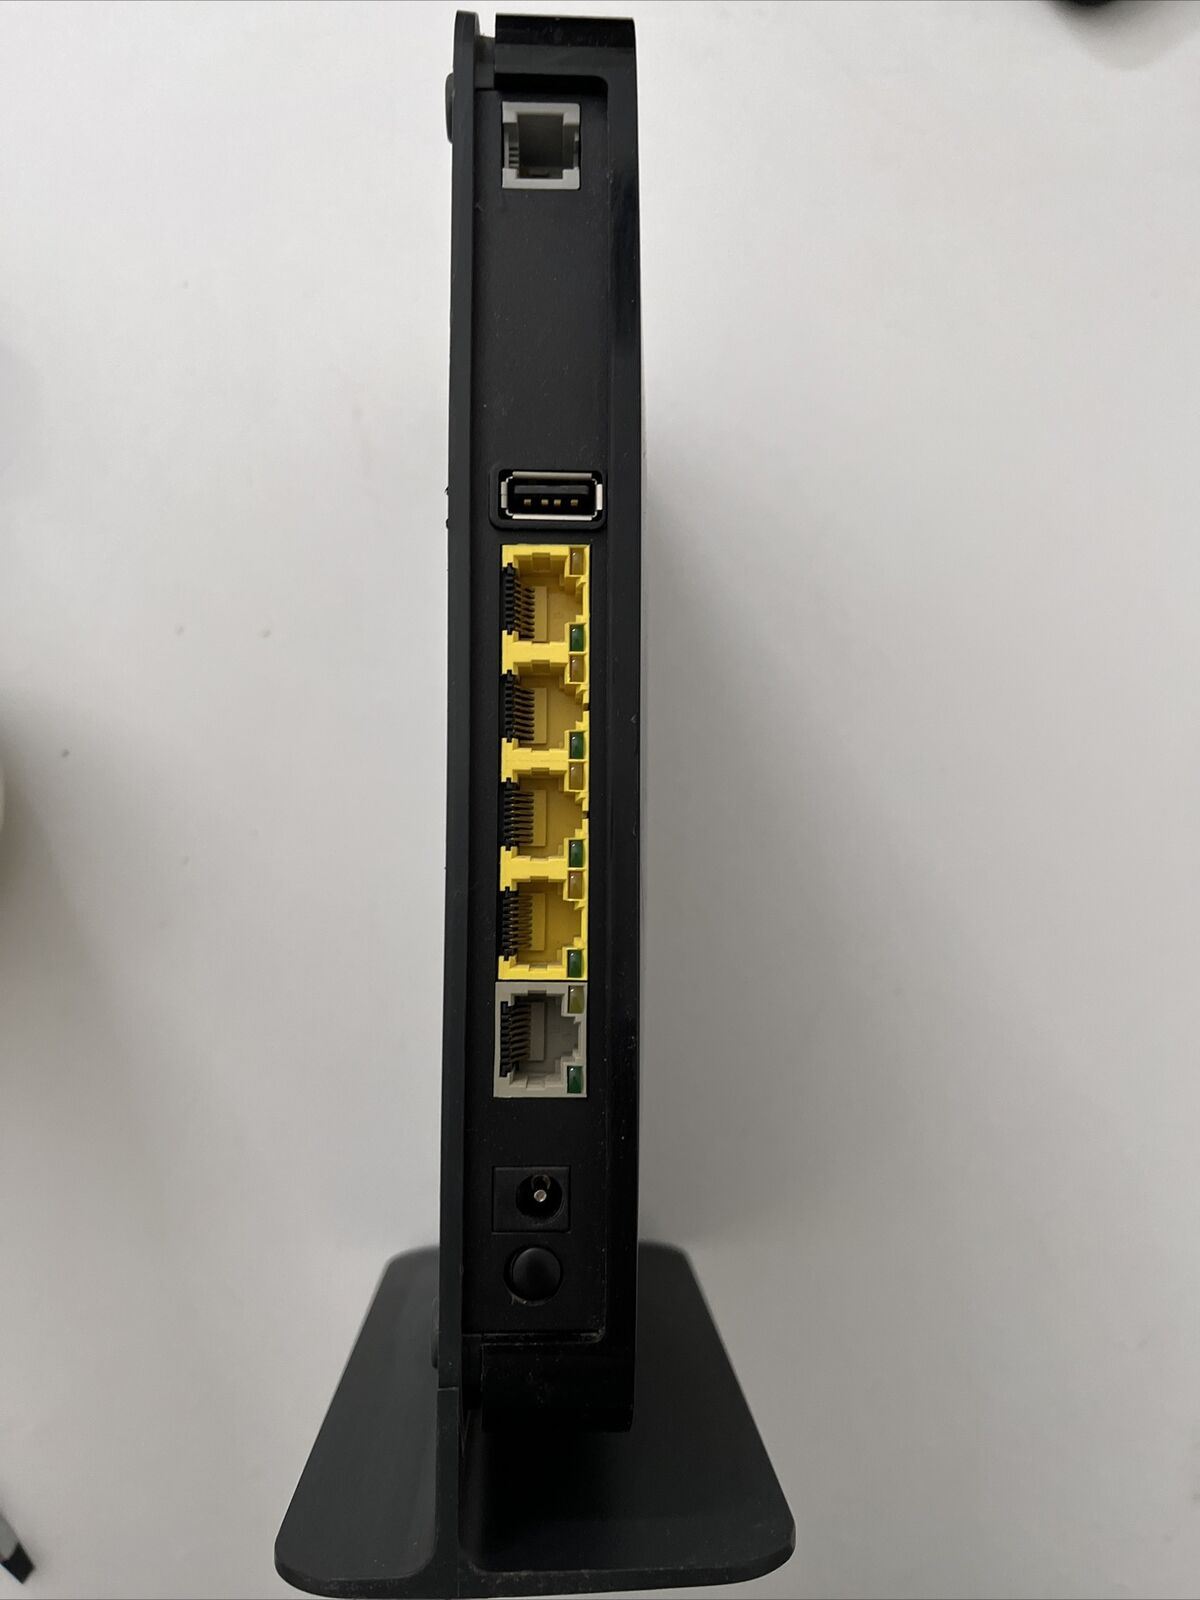 Netgear N600 Wireless Dual Band Gigabit Modem Router ADSL2+  DGND3700v2